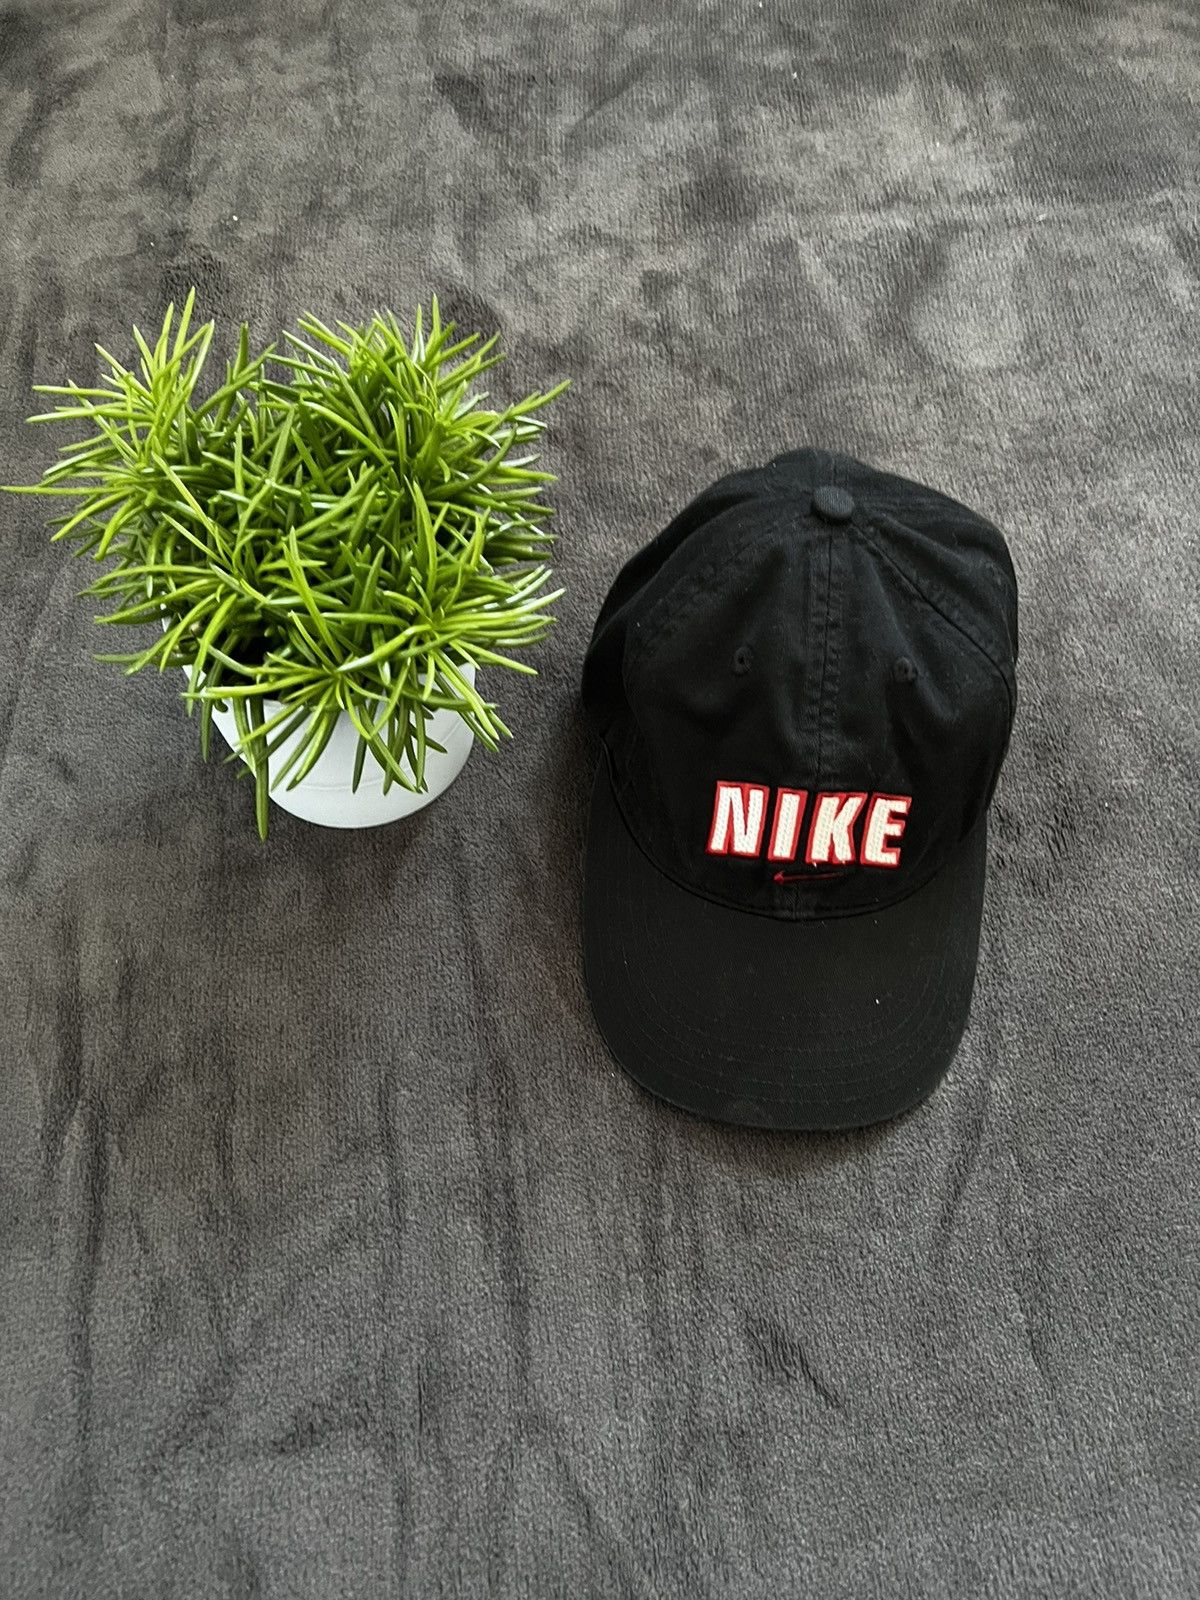 Rare* Vintage '90s Nike Hat